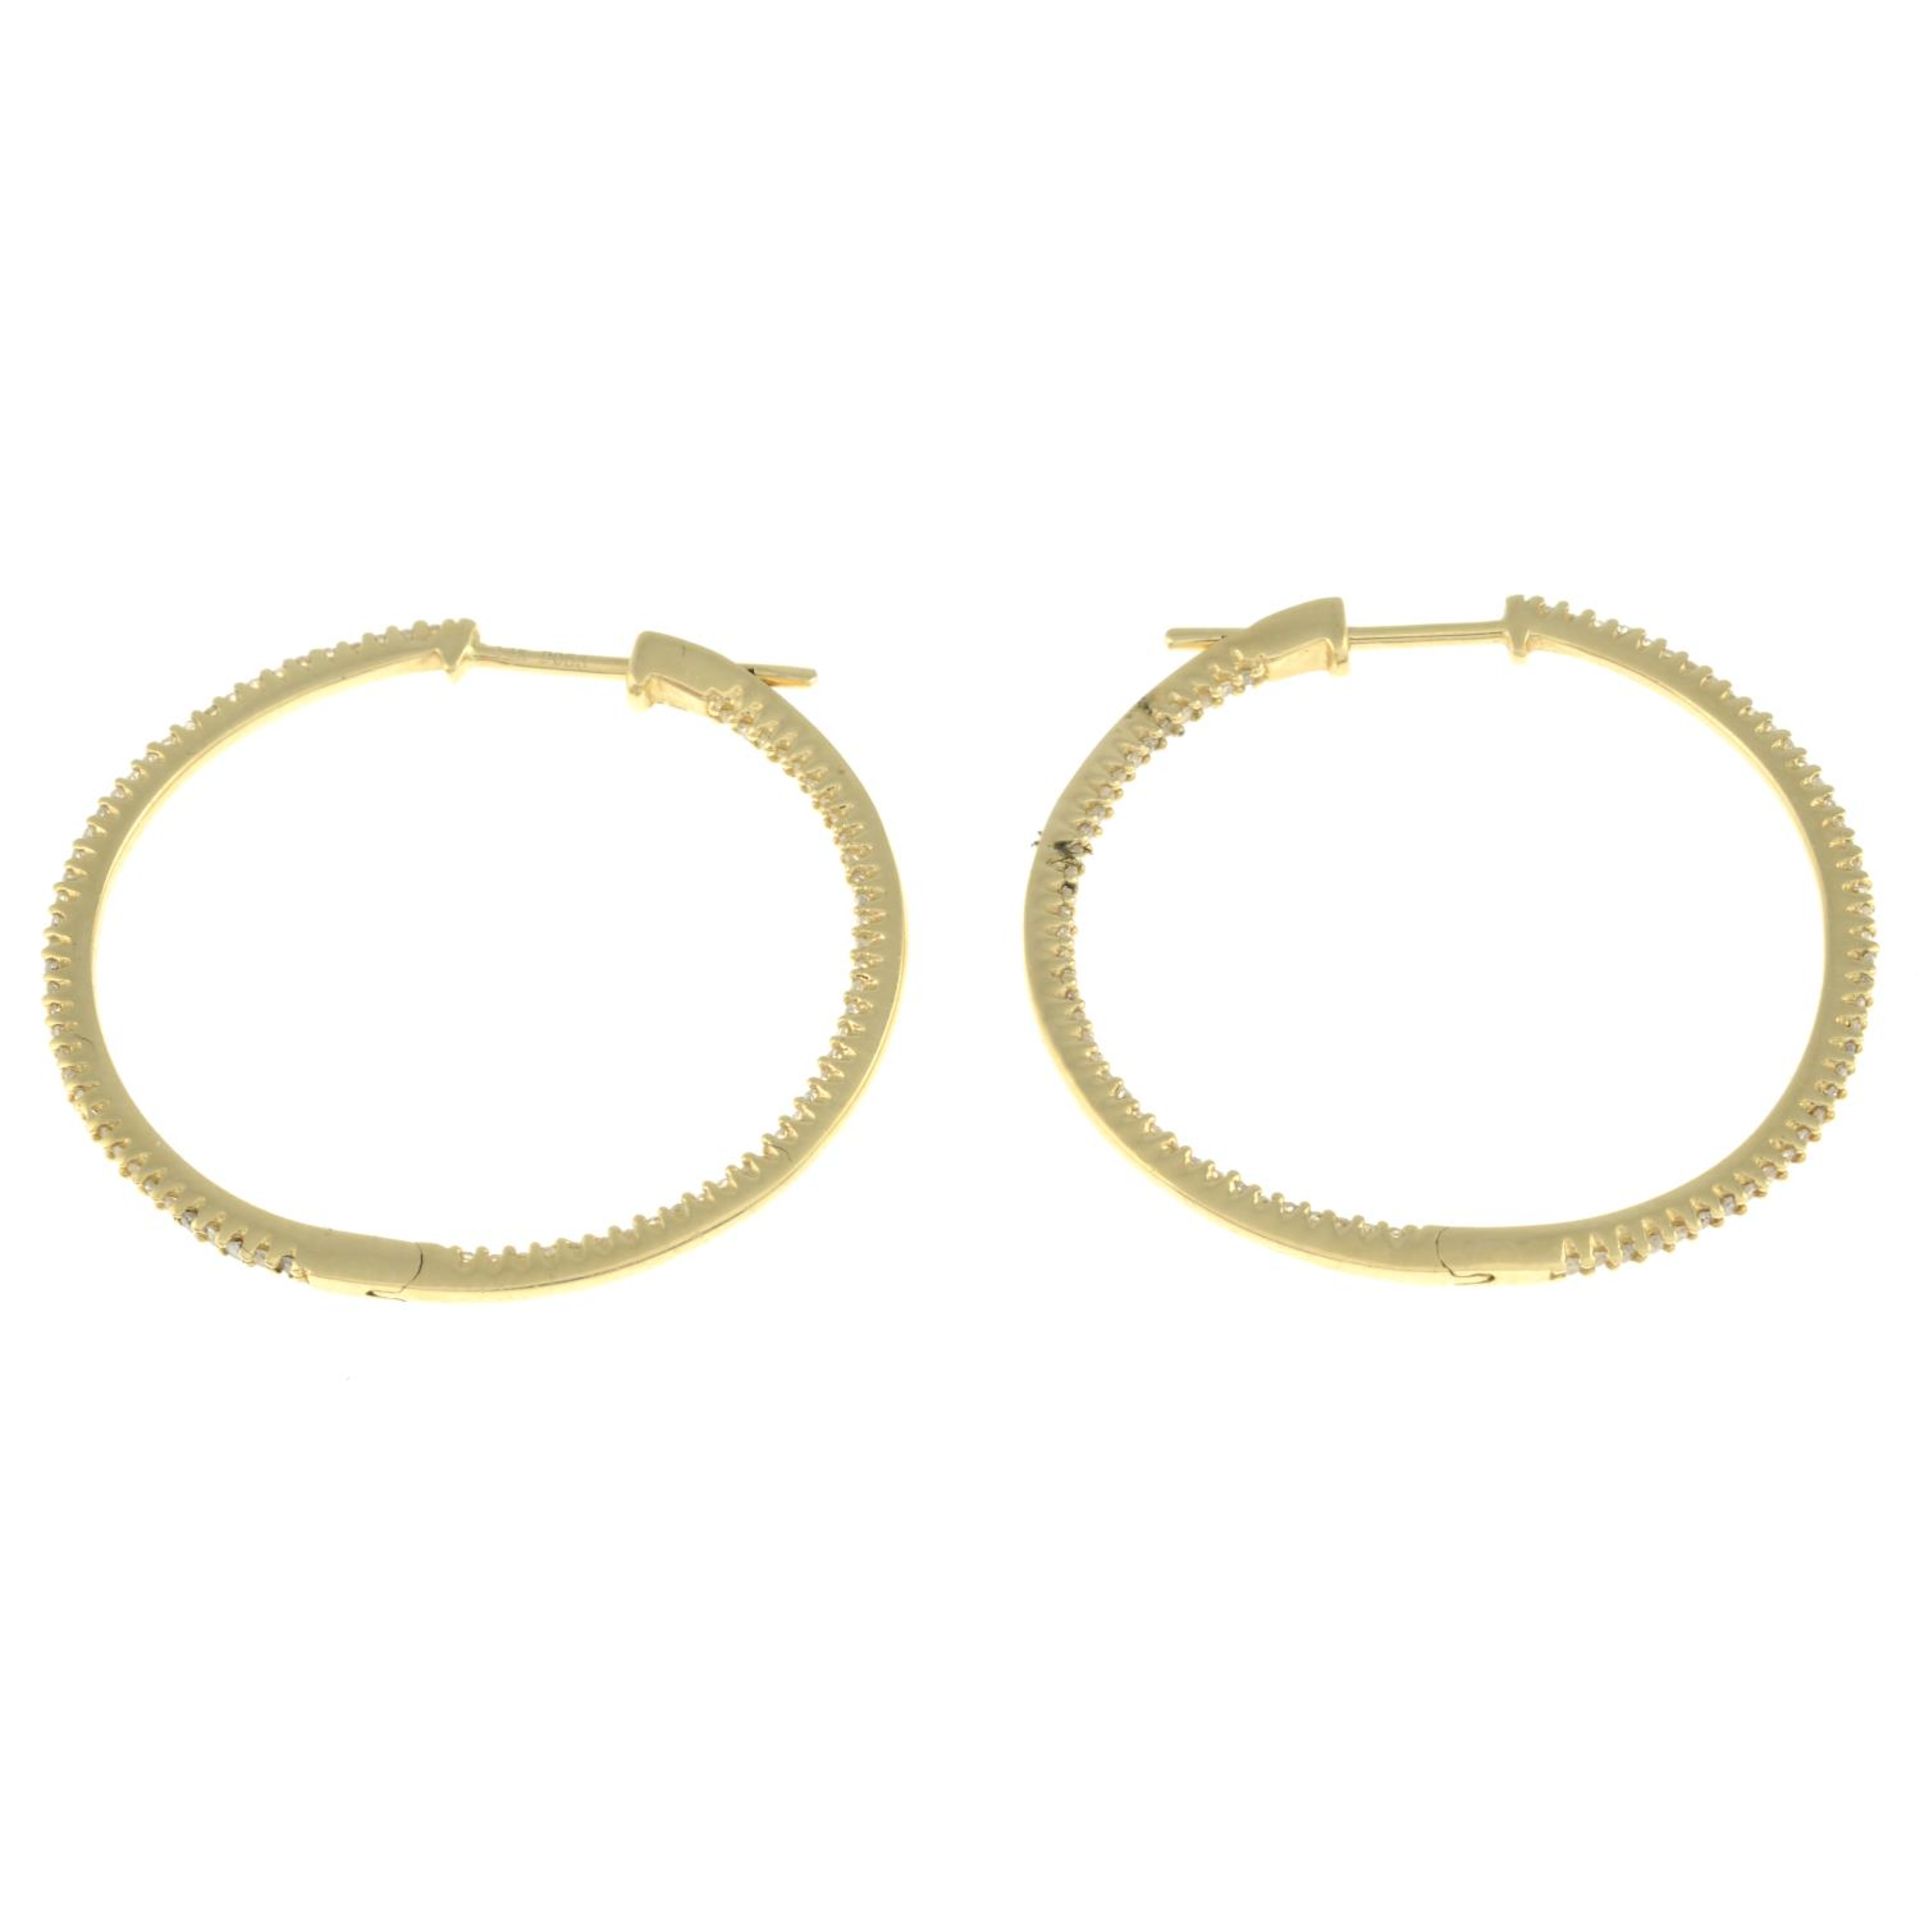 A pair of diamond hoop earrings.Total diamond weight 0.53ct, stamped to mount.